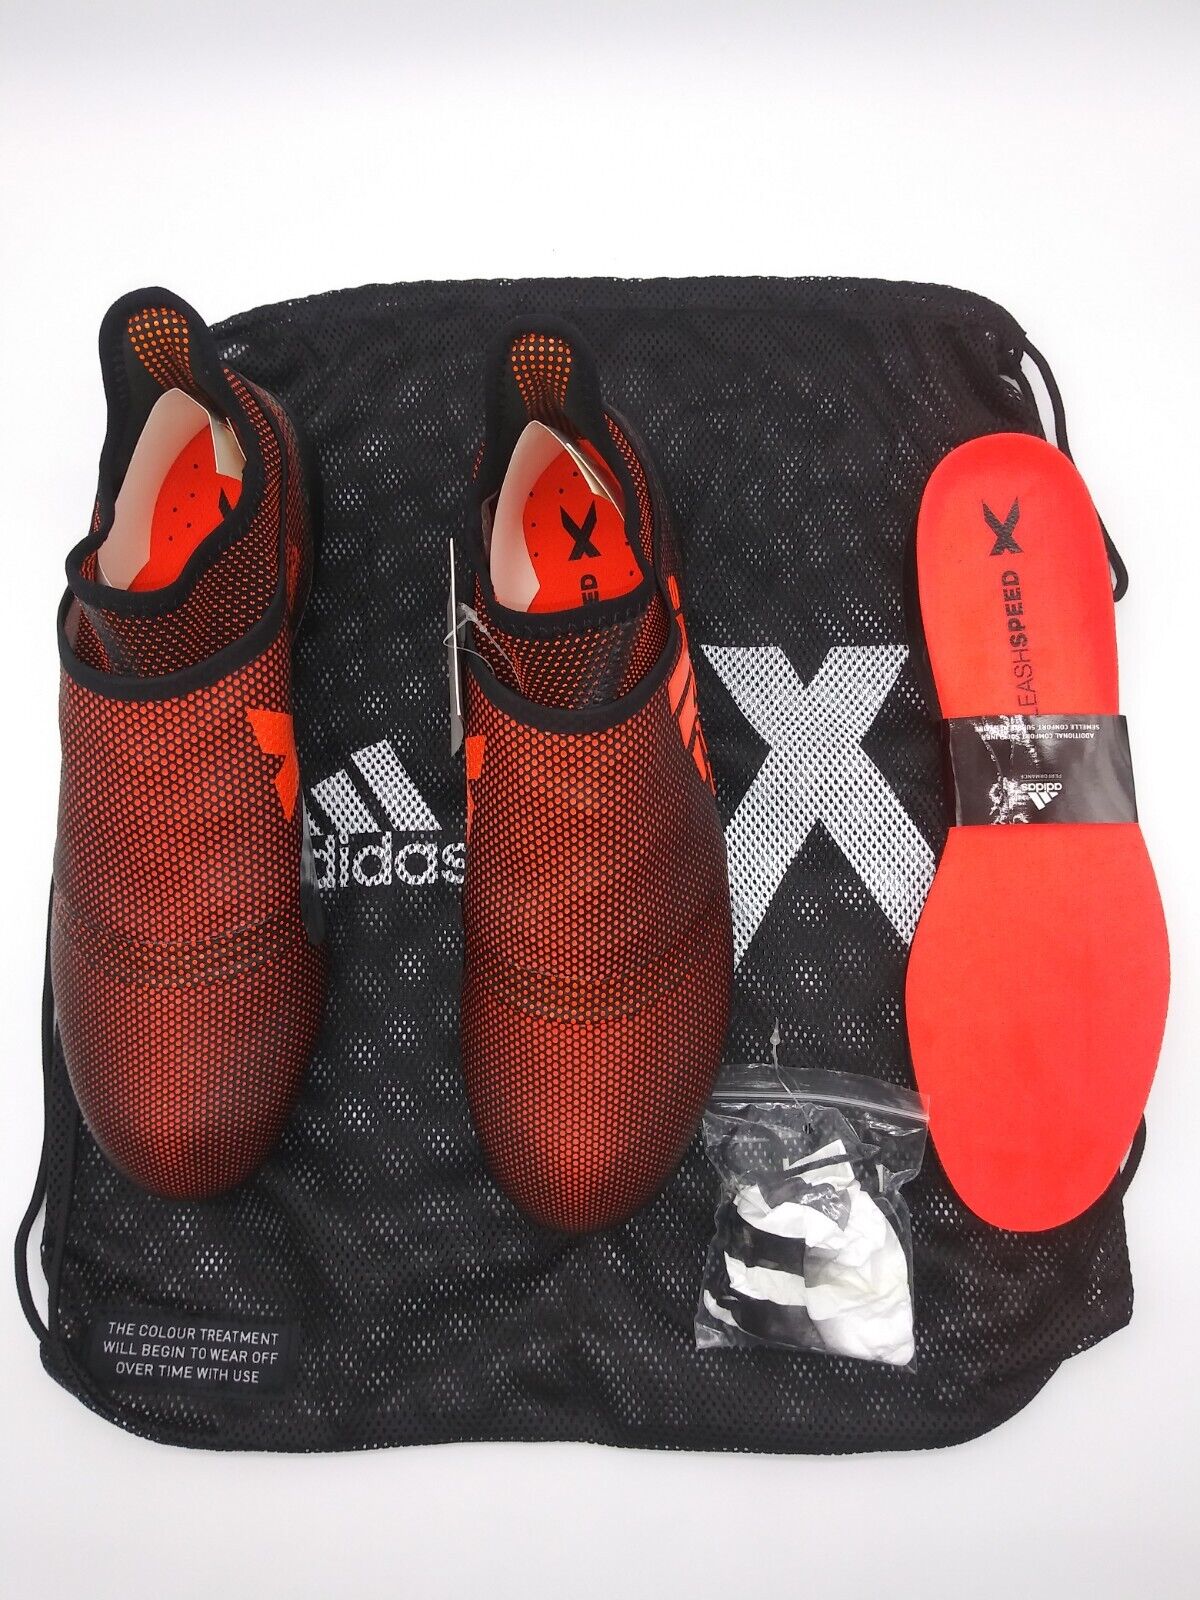 Adidas X17+ Purespeed SG  Black Red